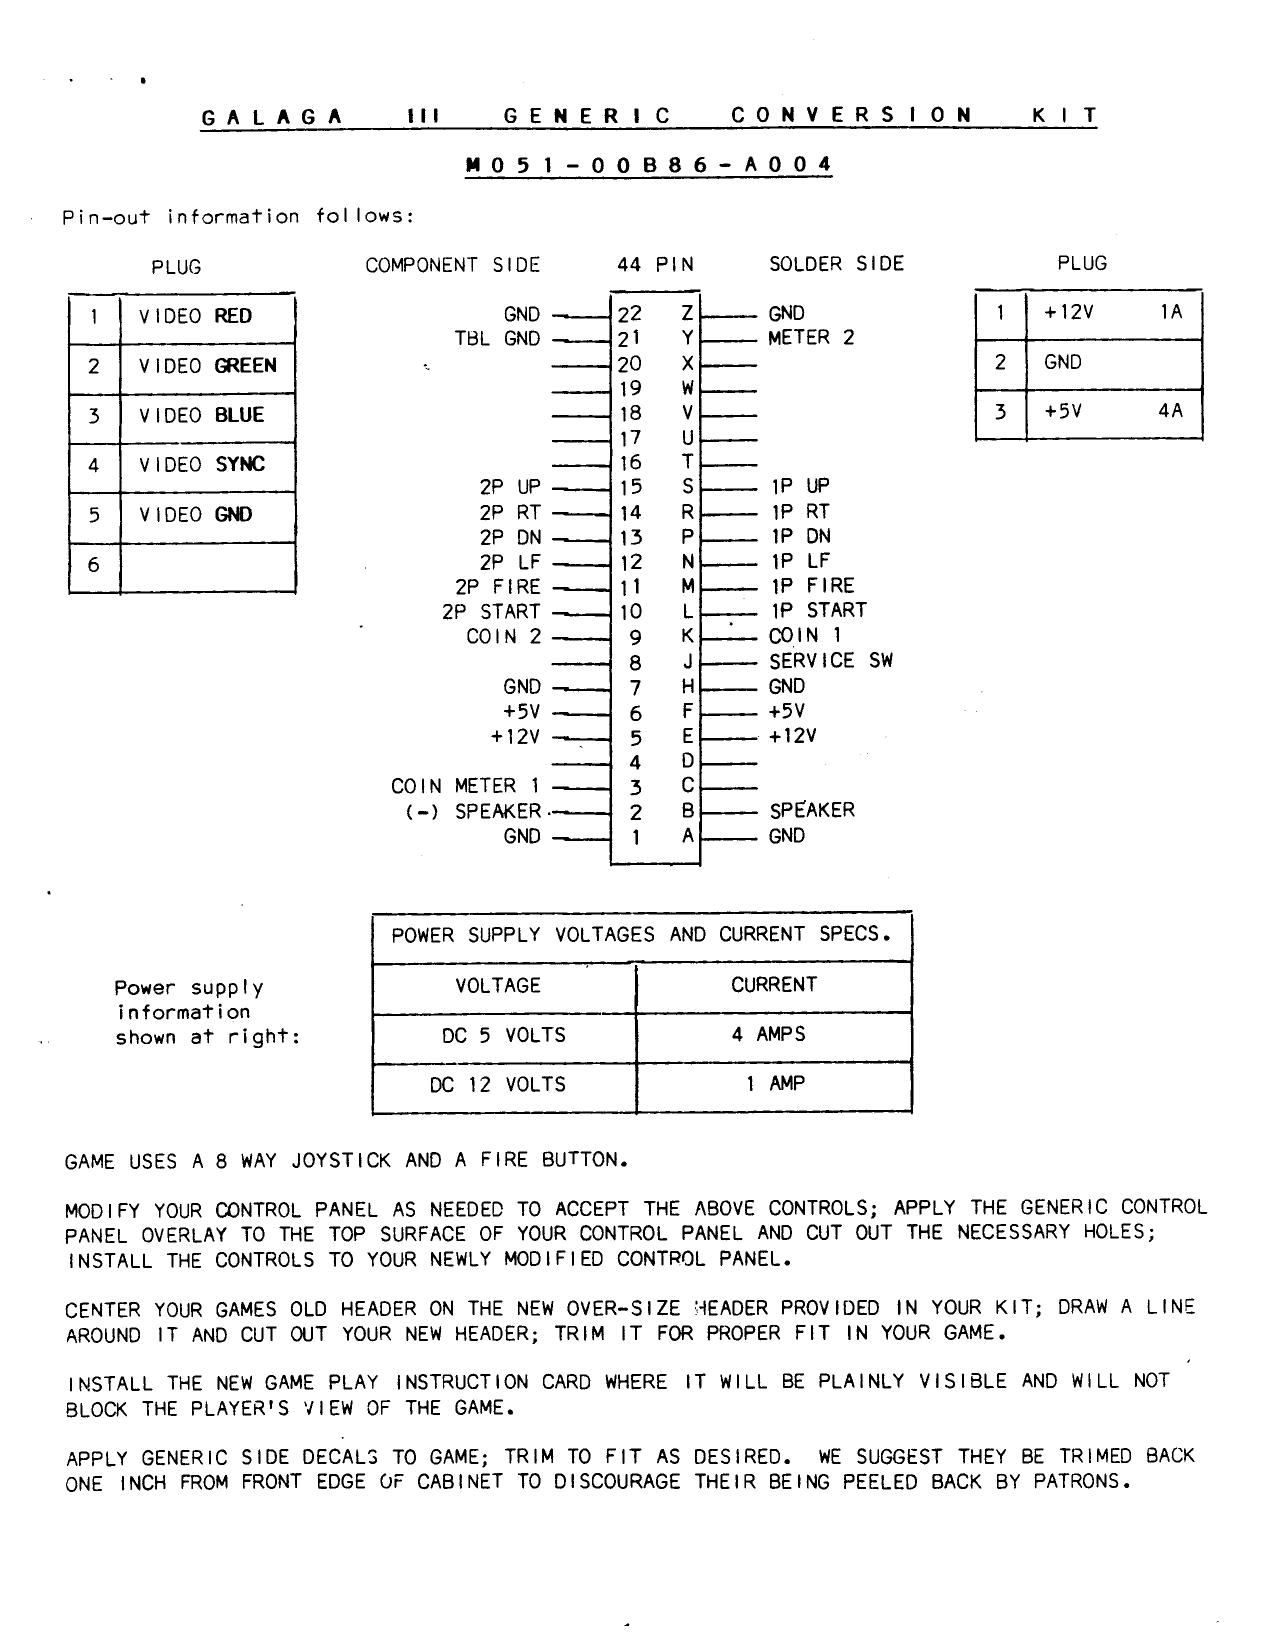 Galaga 3 (Generic Conversion Kit) (U)